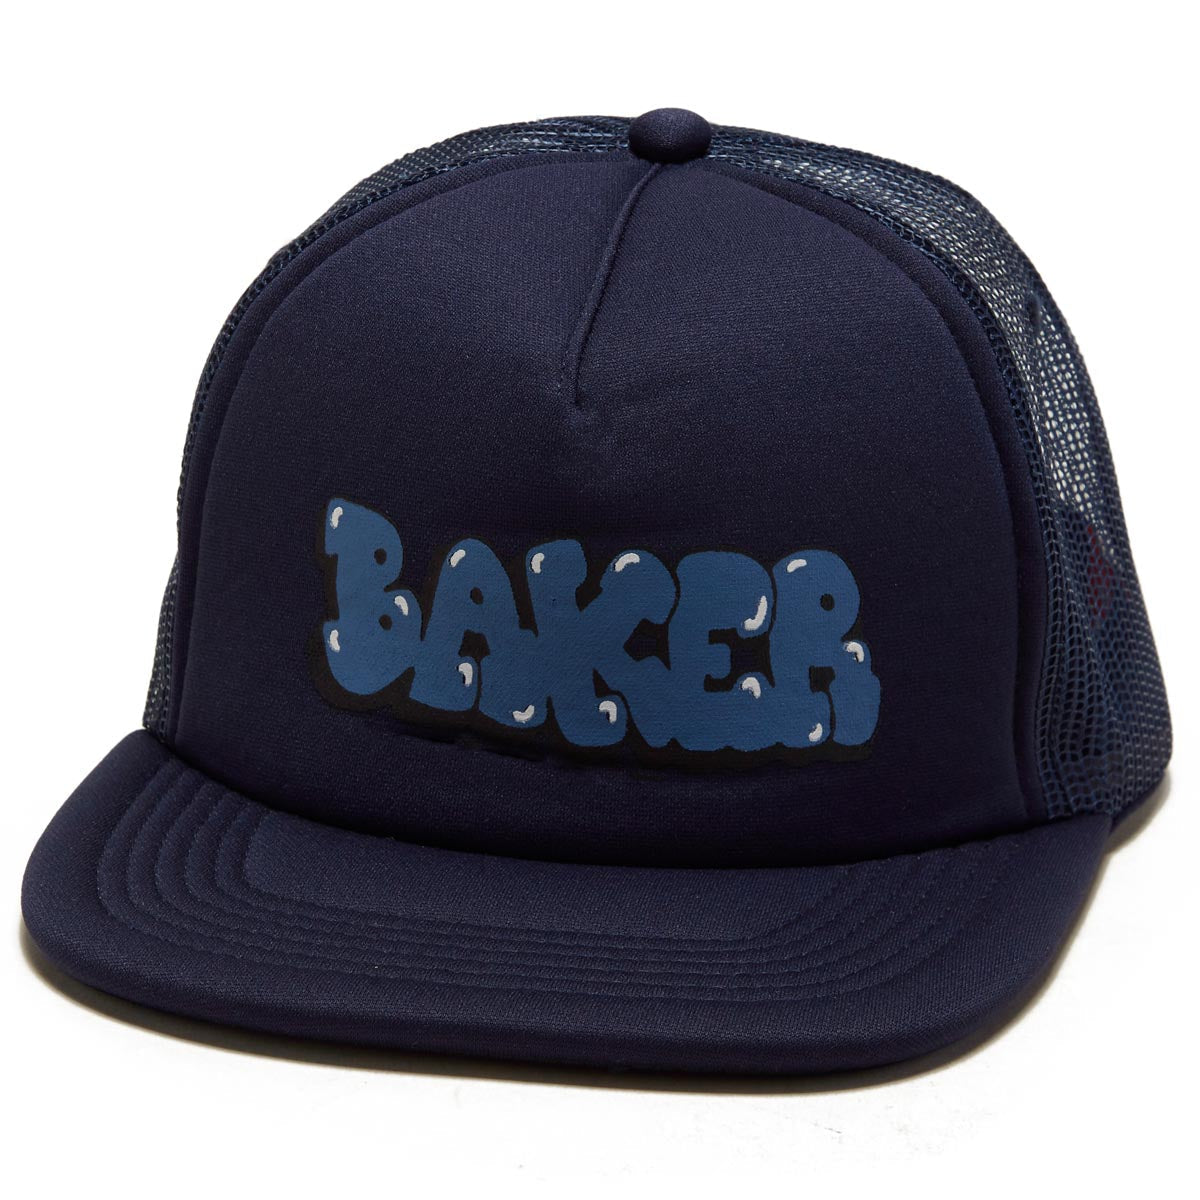 Baker Bubble Mesh Trucker Hat - Navy image 1